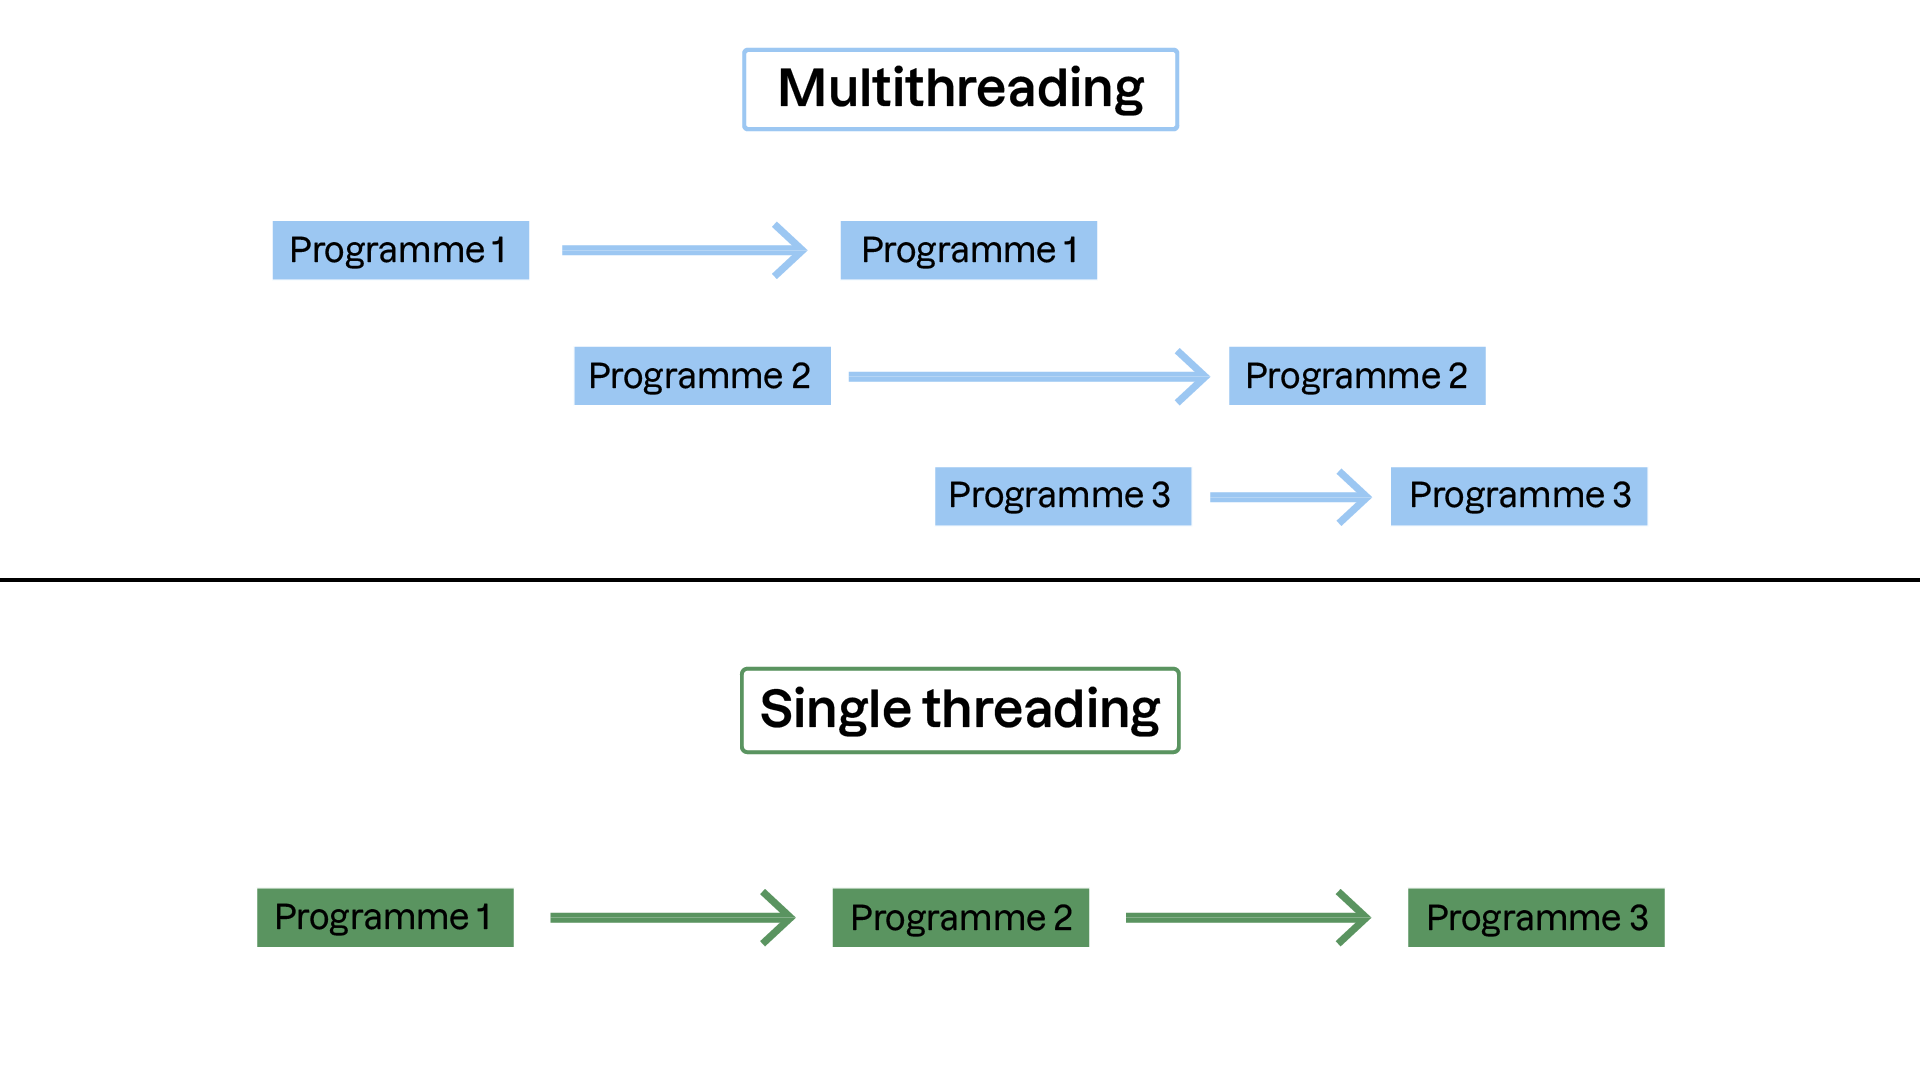 Le multithreading comparé au single threading